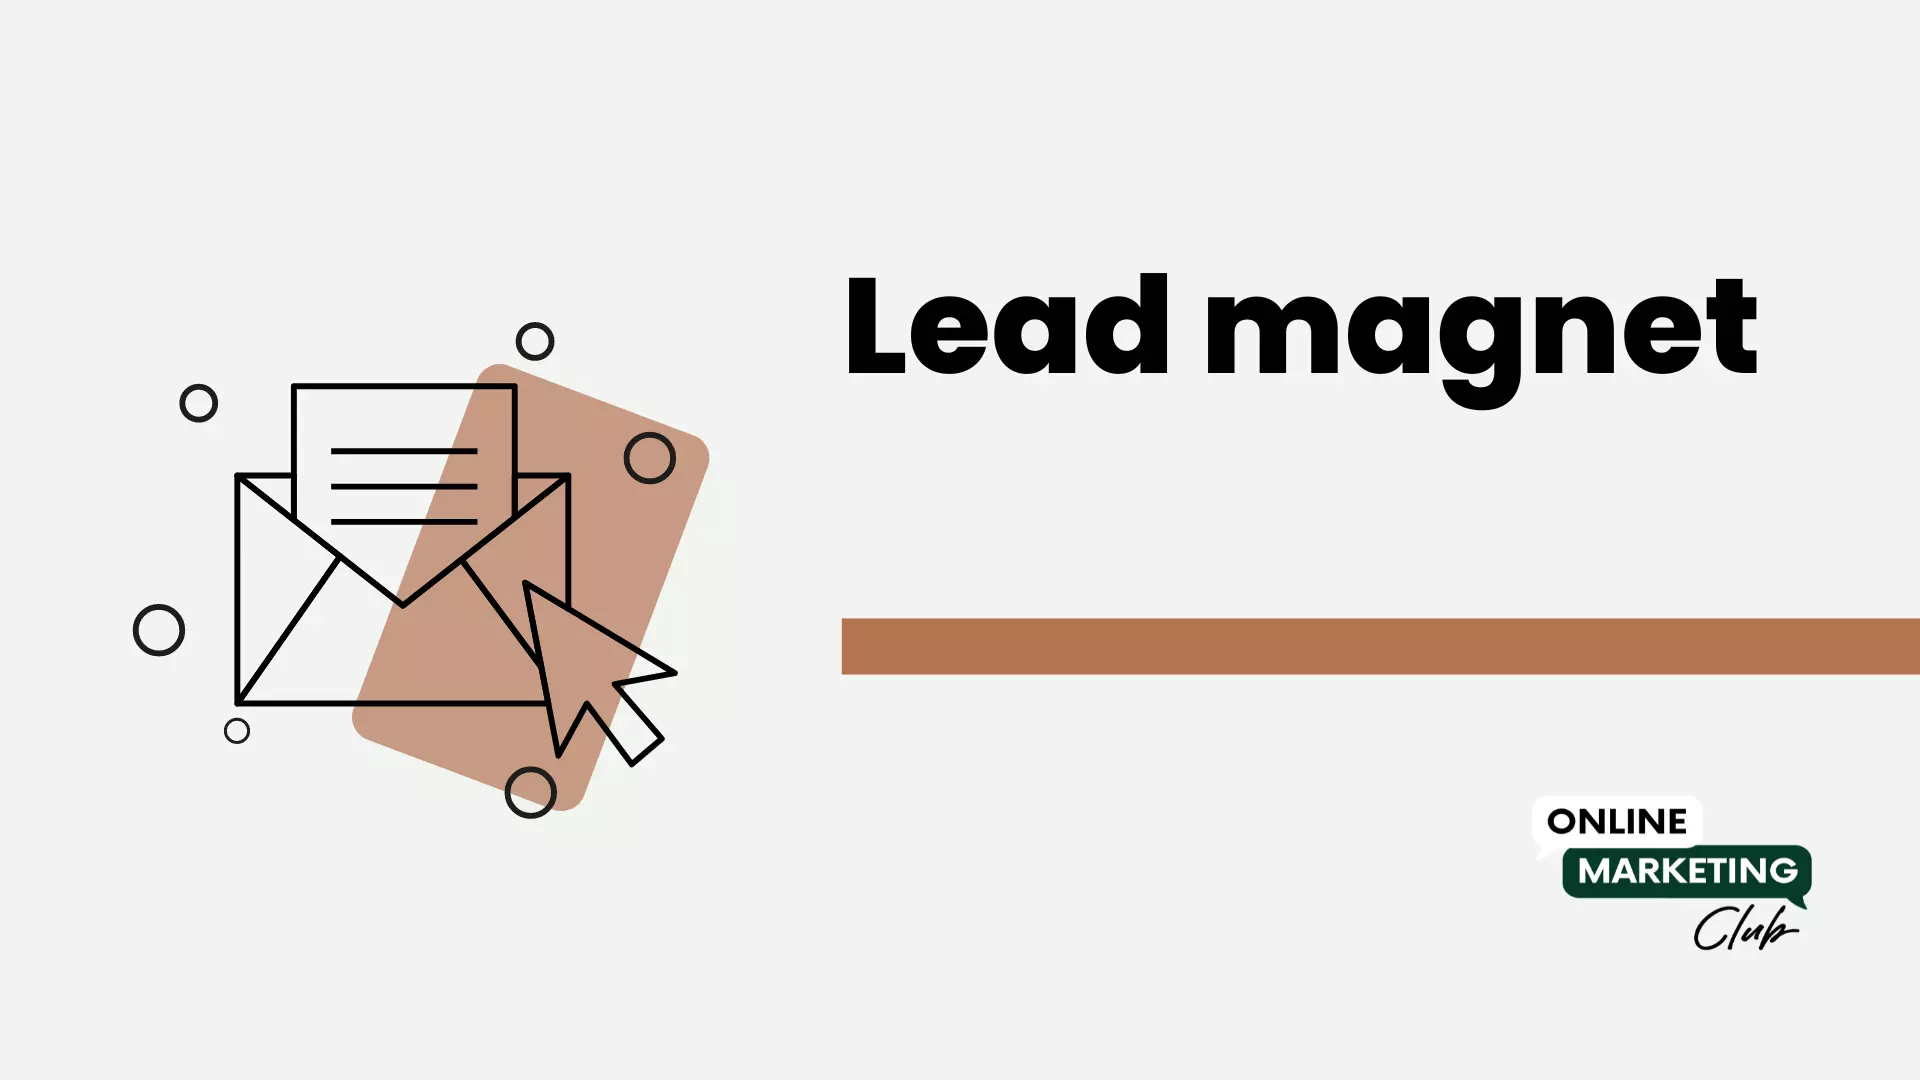 Lead magnet